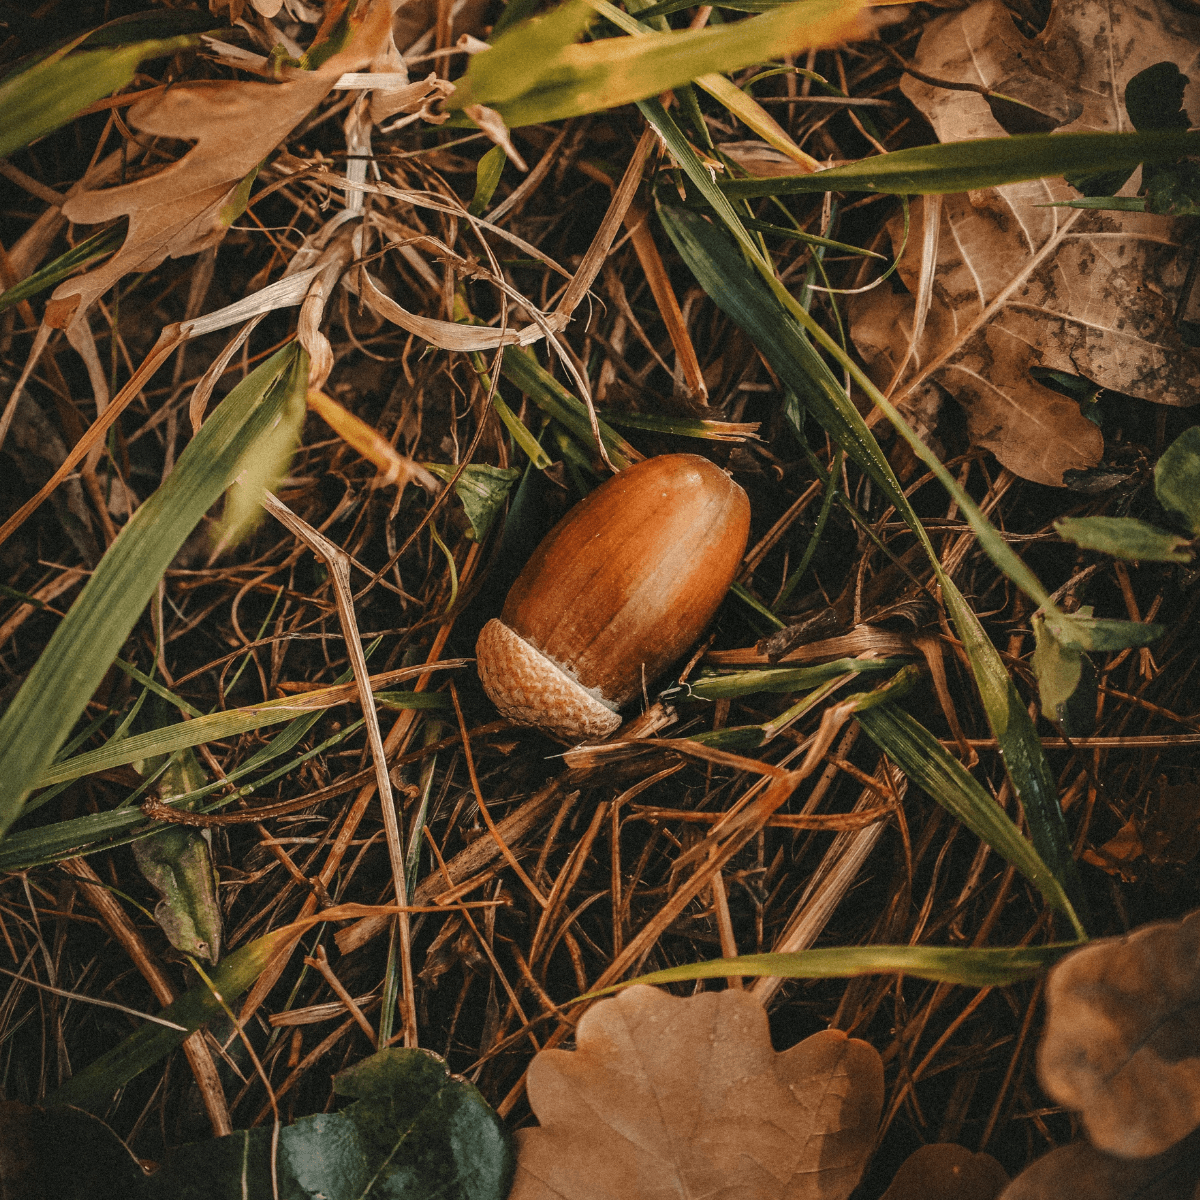 Acorn in grass